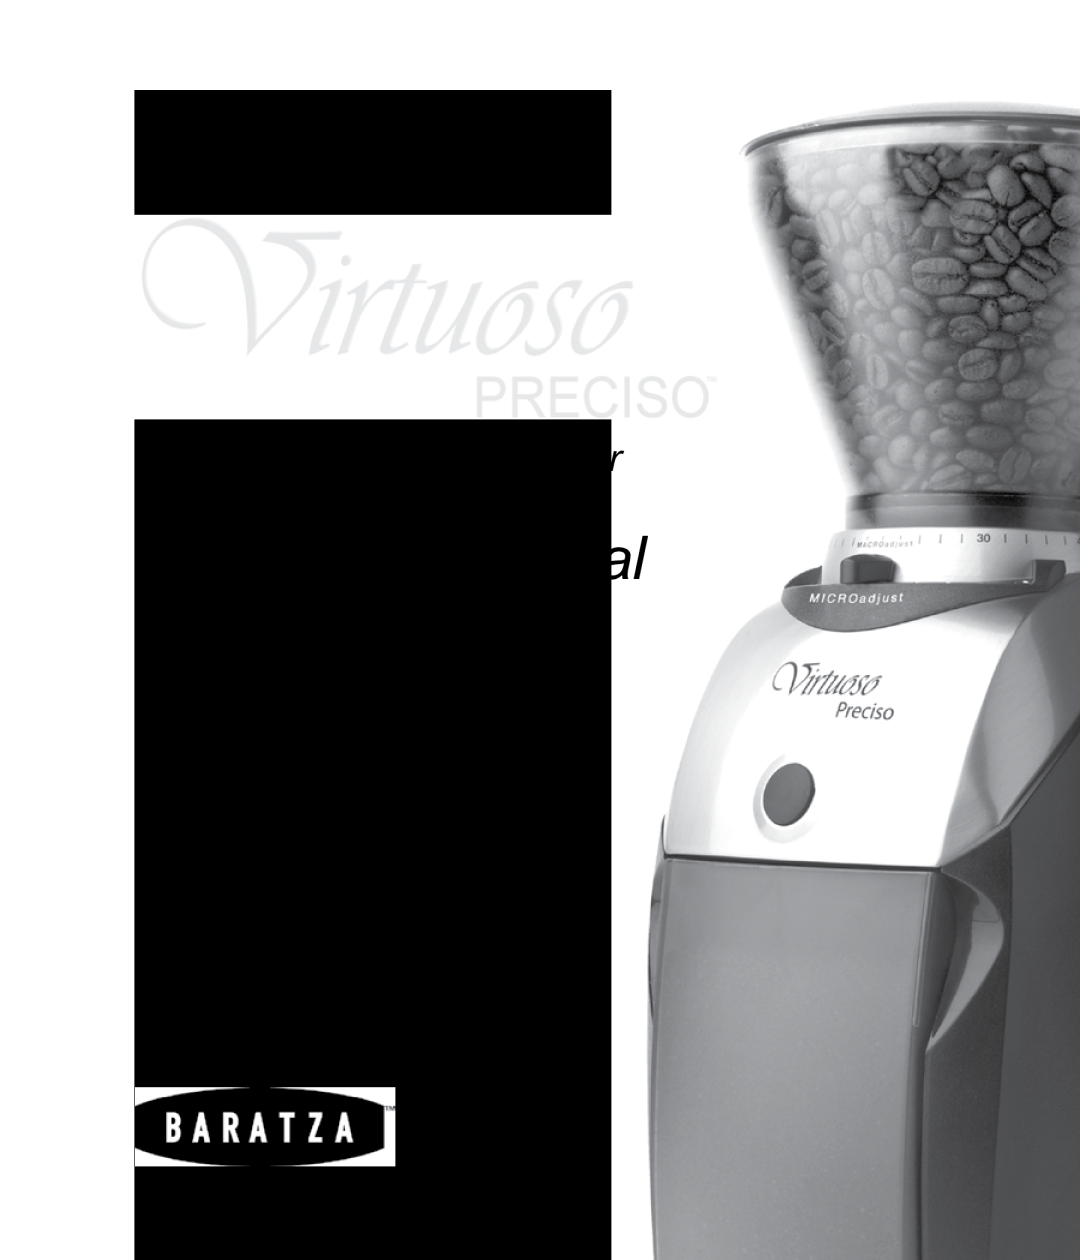 Baratza B-Preciso, B-Virtuoso manual Operations Manual, Conical Burr Coffee Grinder 